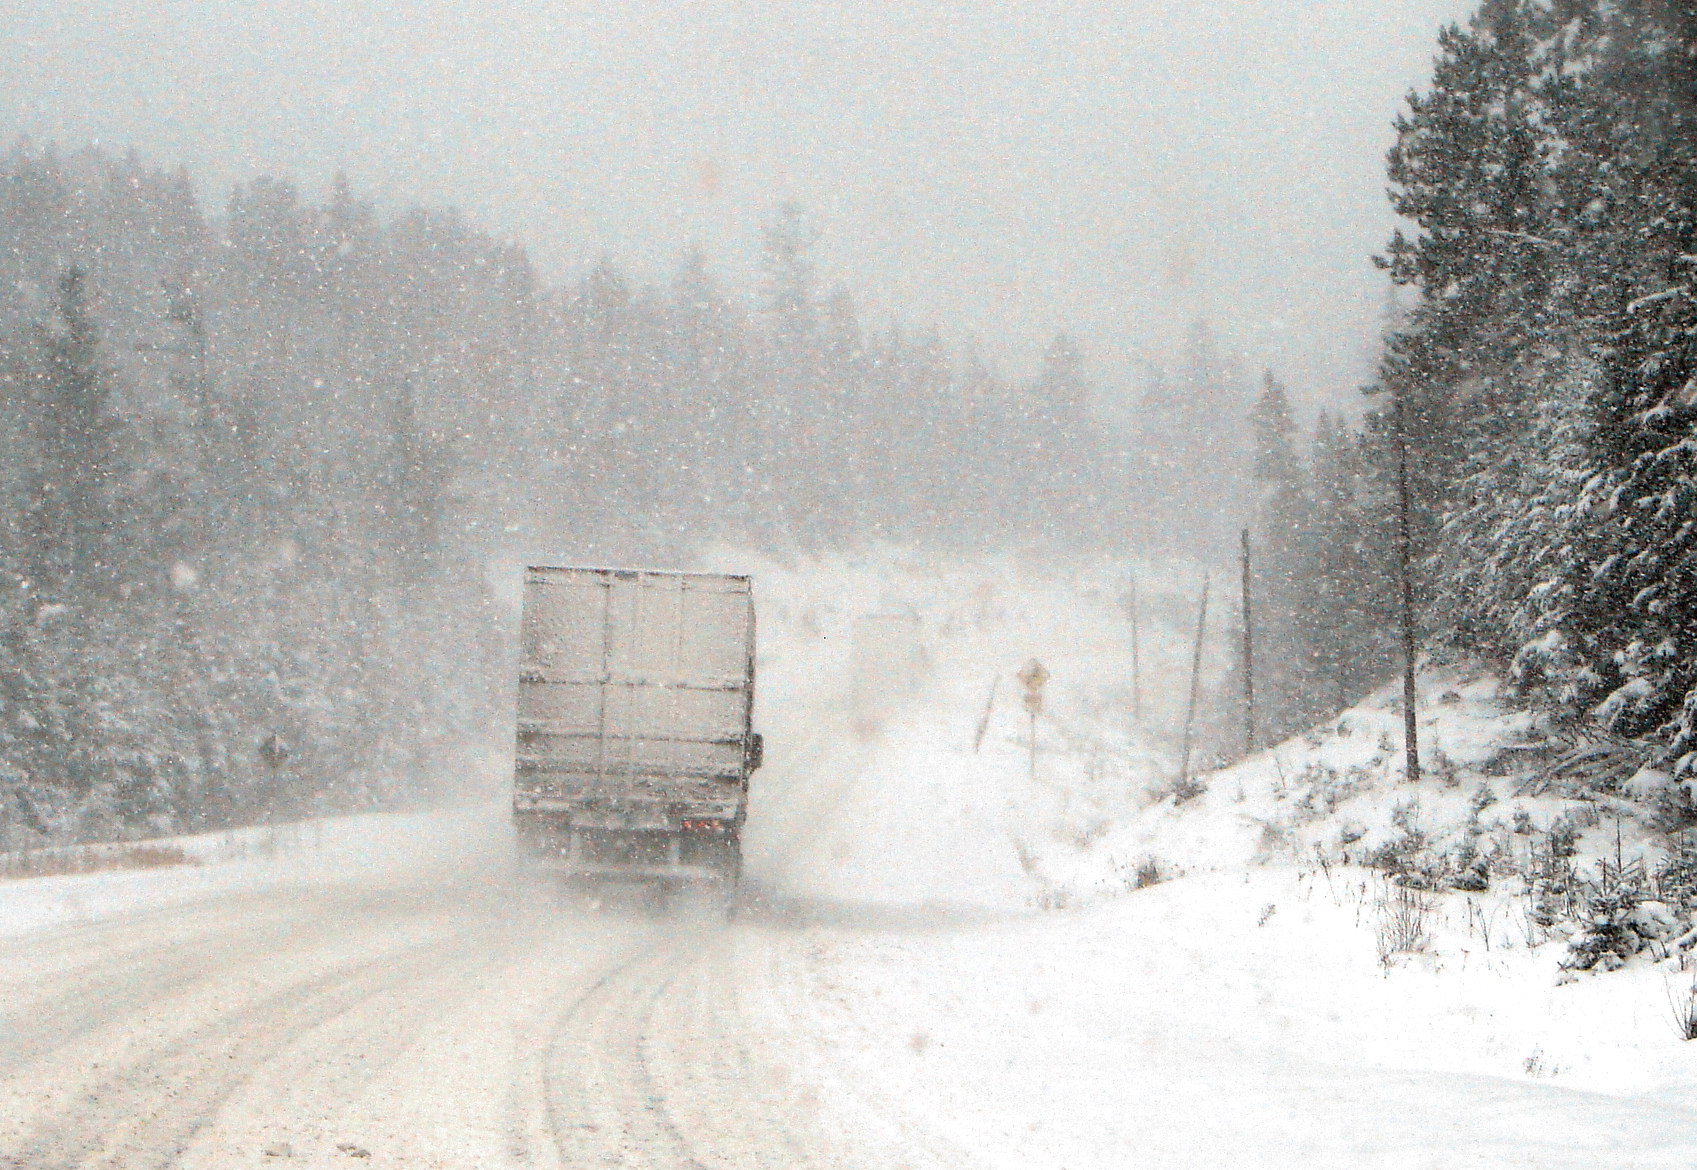 Semi-truck driving in the winter